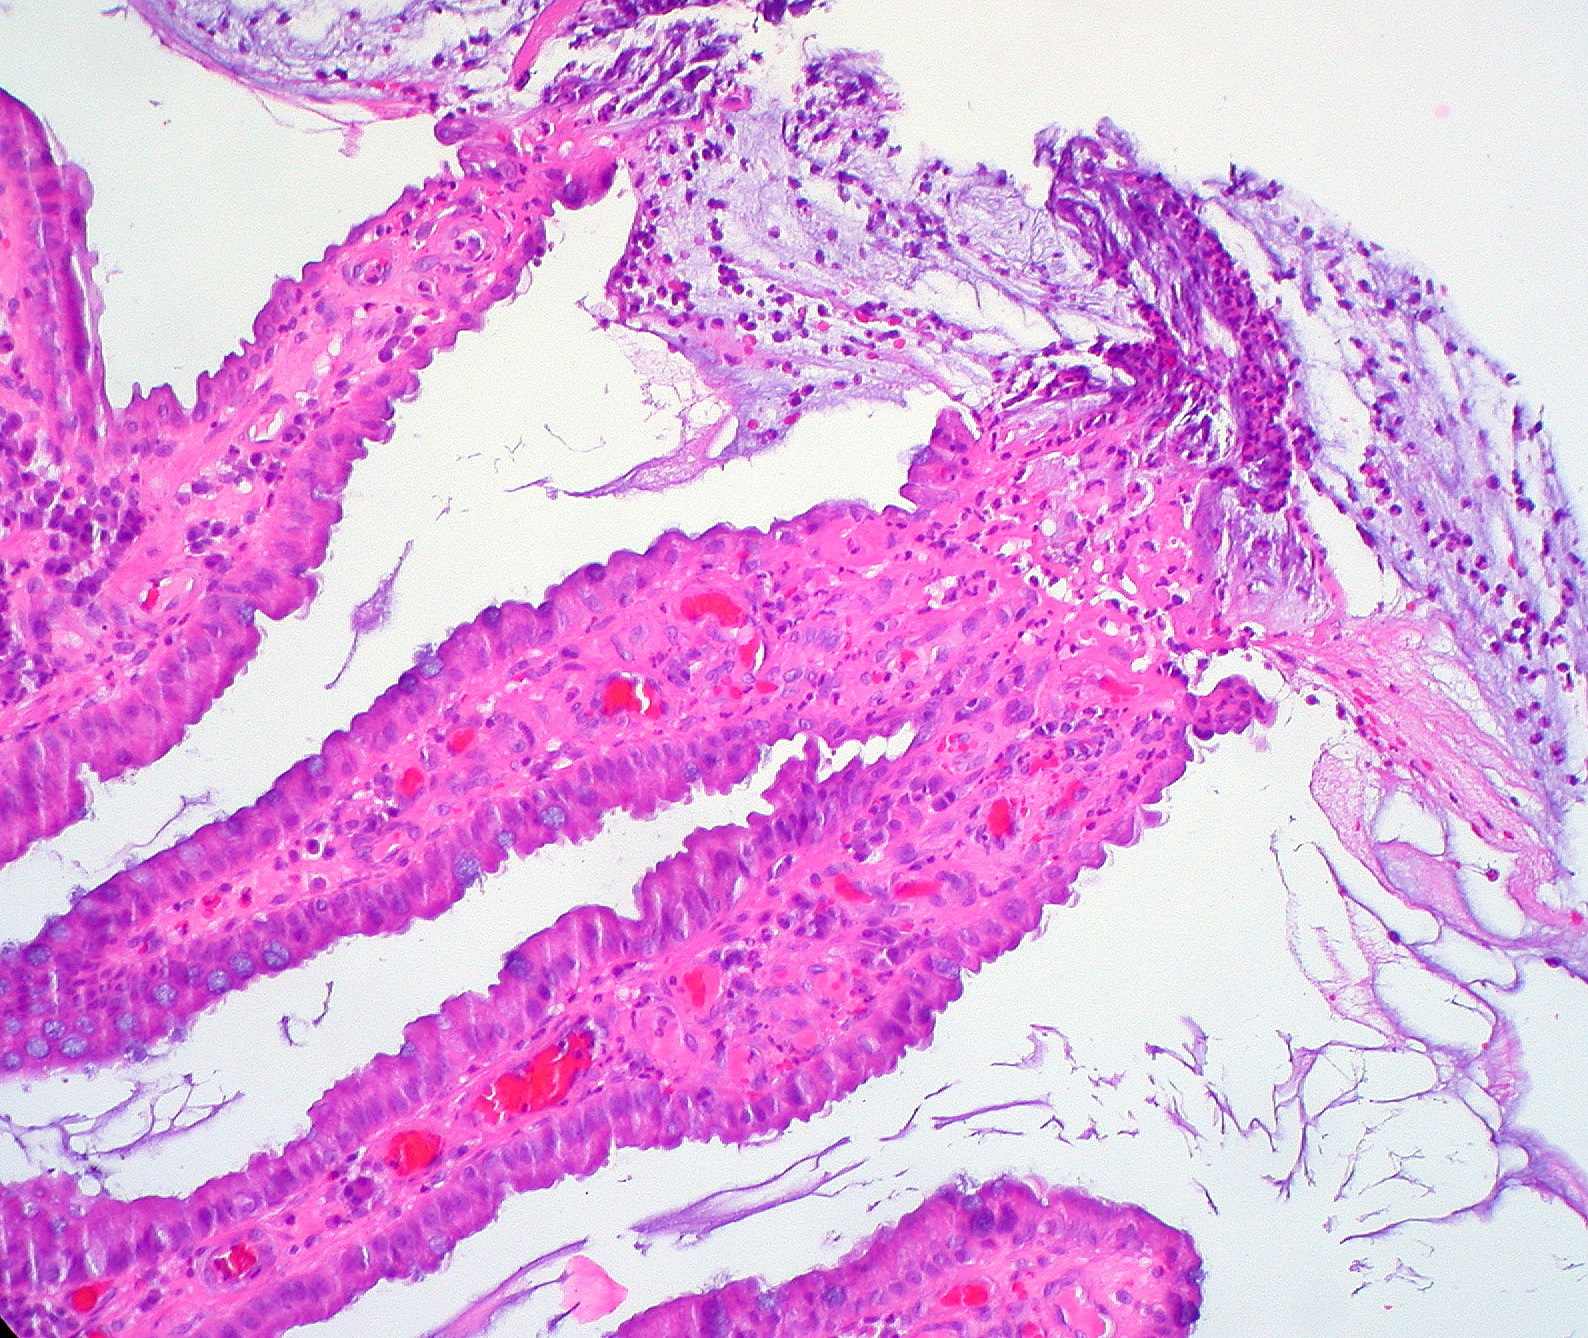 The file mapisvc inflammatory disease